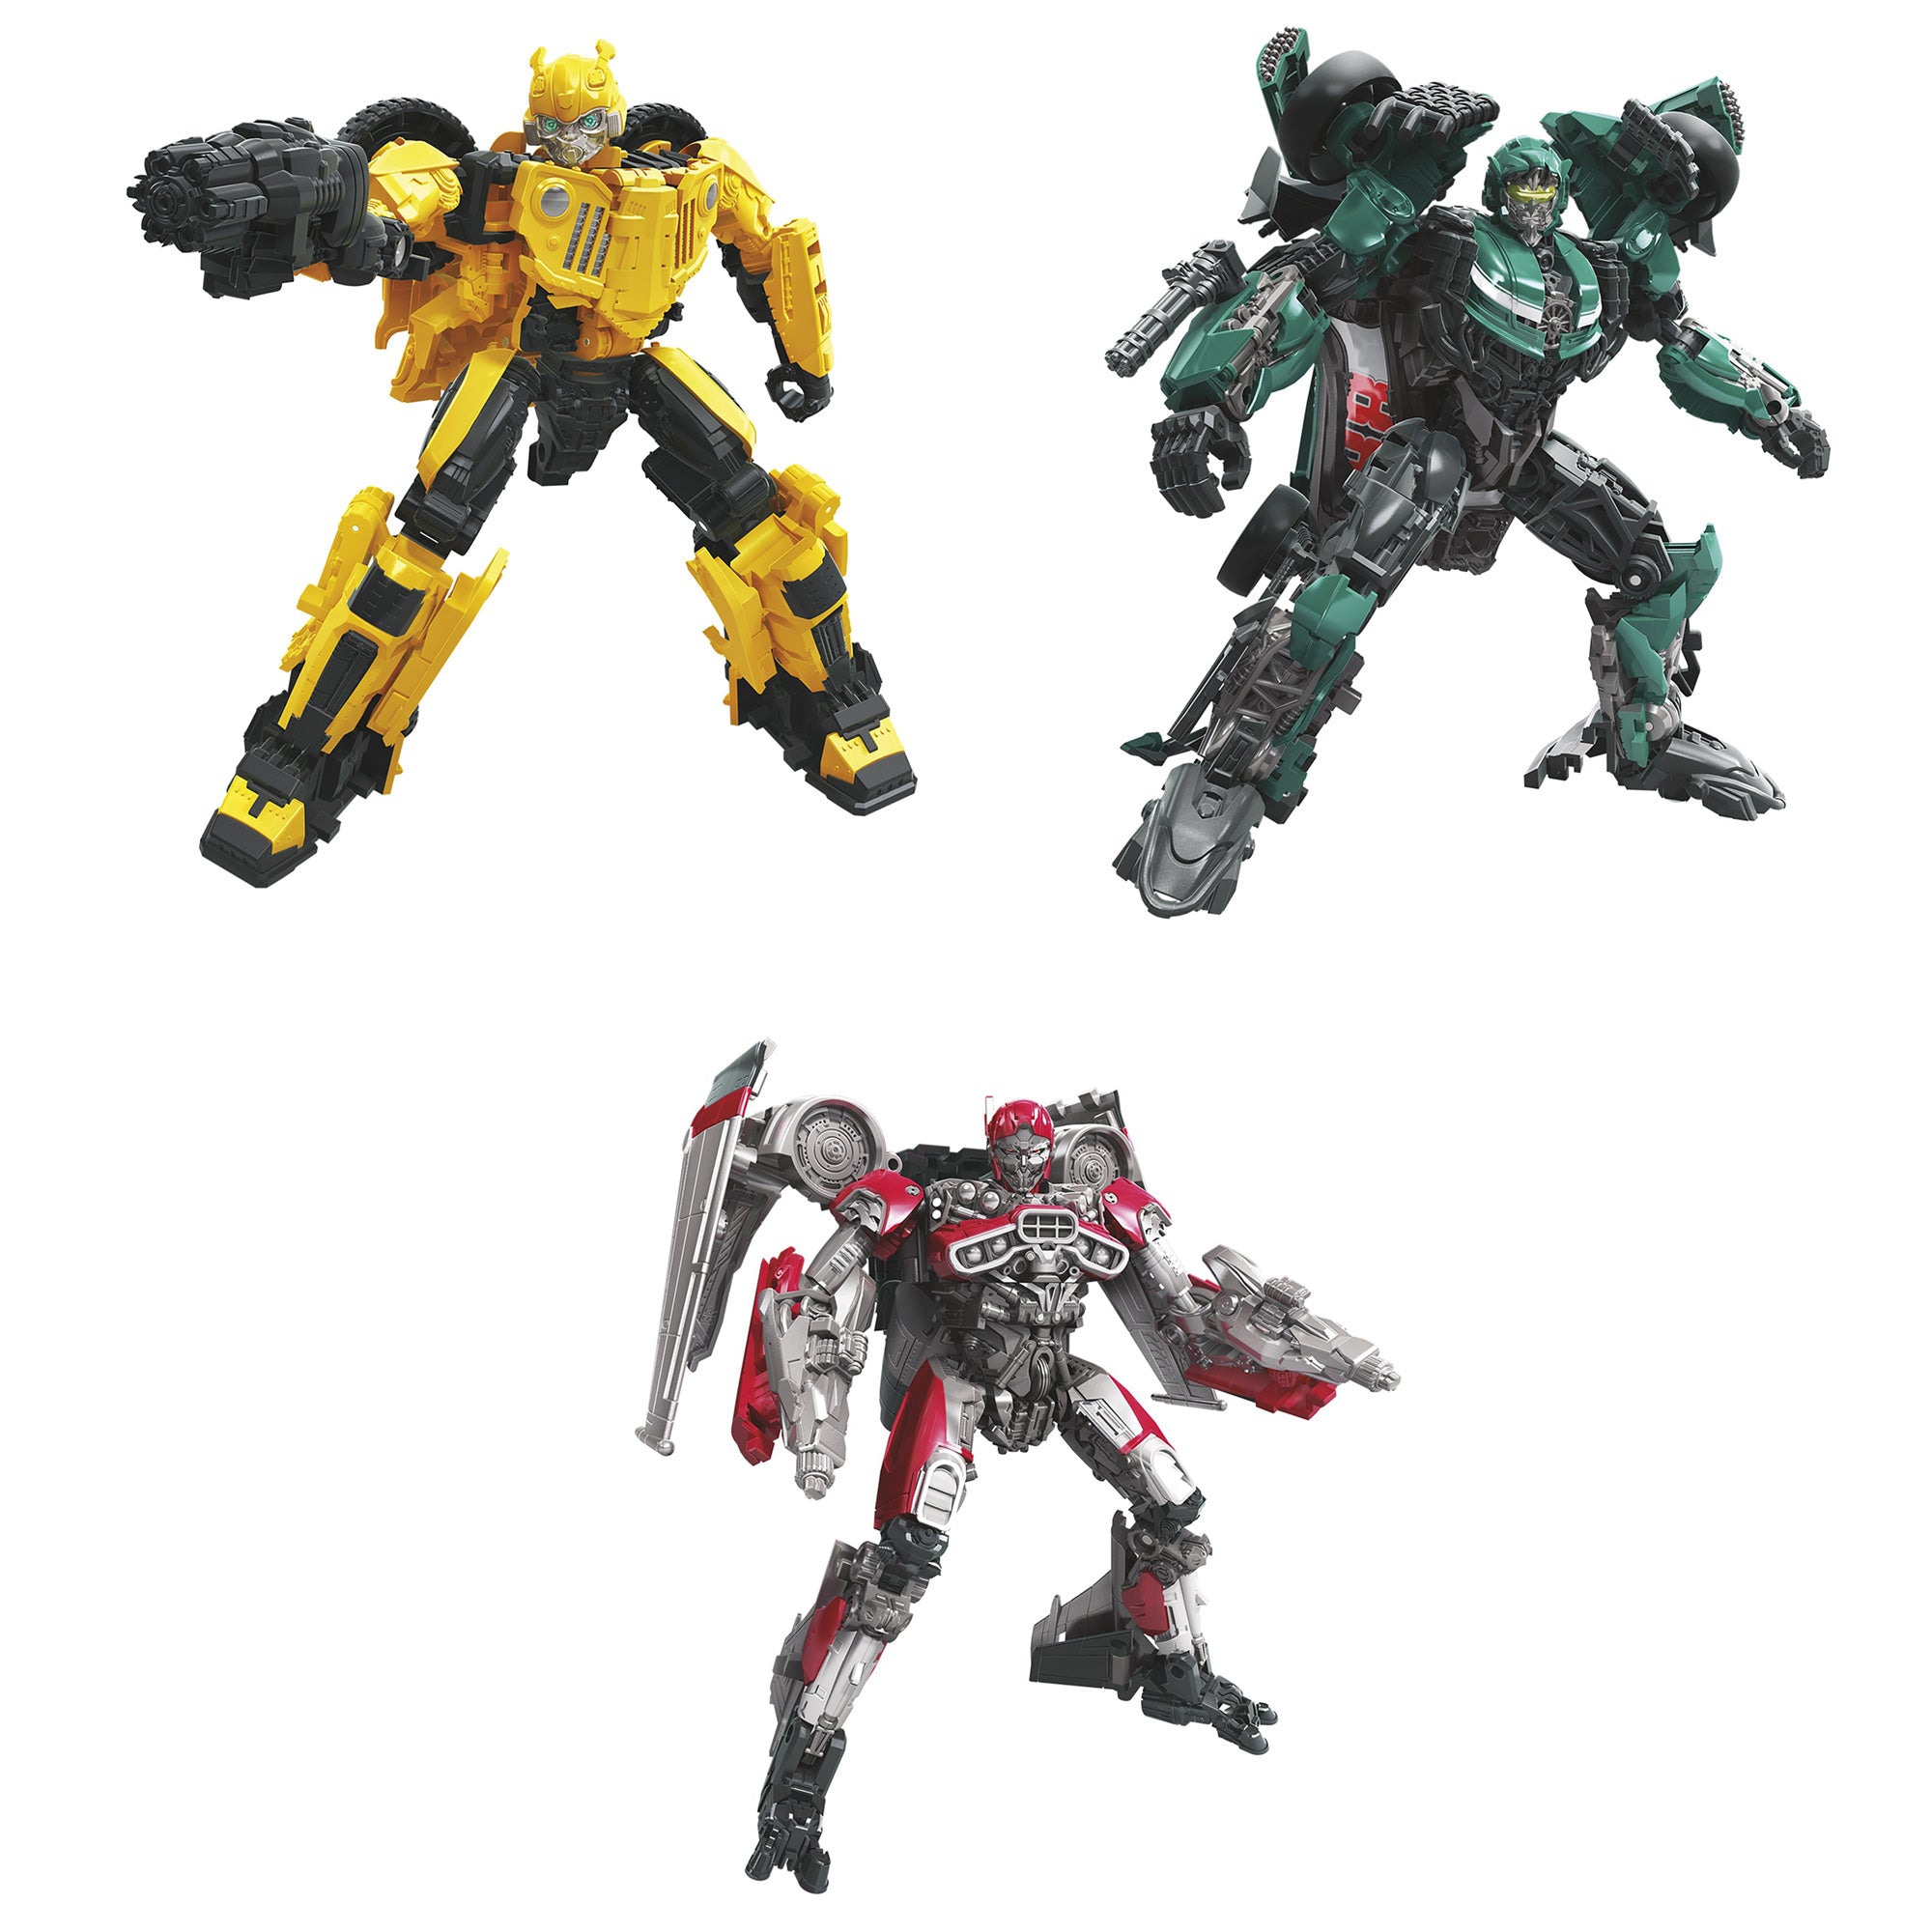 Hasbro - Transformers Generations - Studio Series - Deluxe - Offroad Bumblebee, Roadbuster, Shatter (Set of 3) - Marvelous Toys